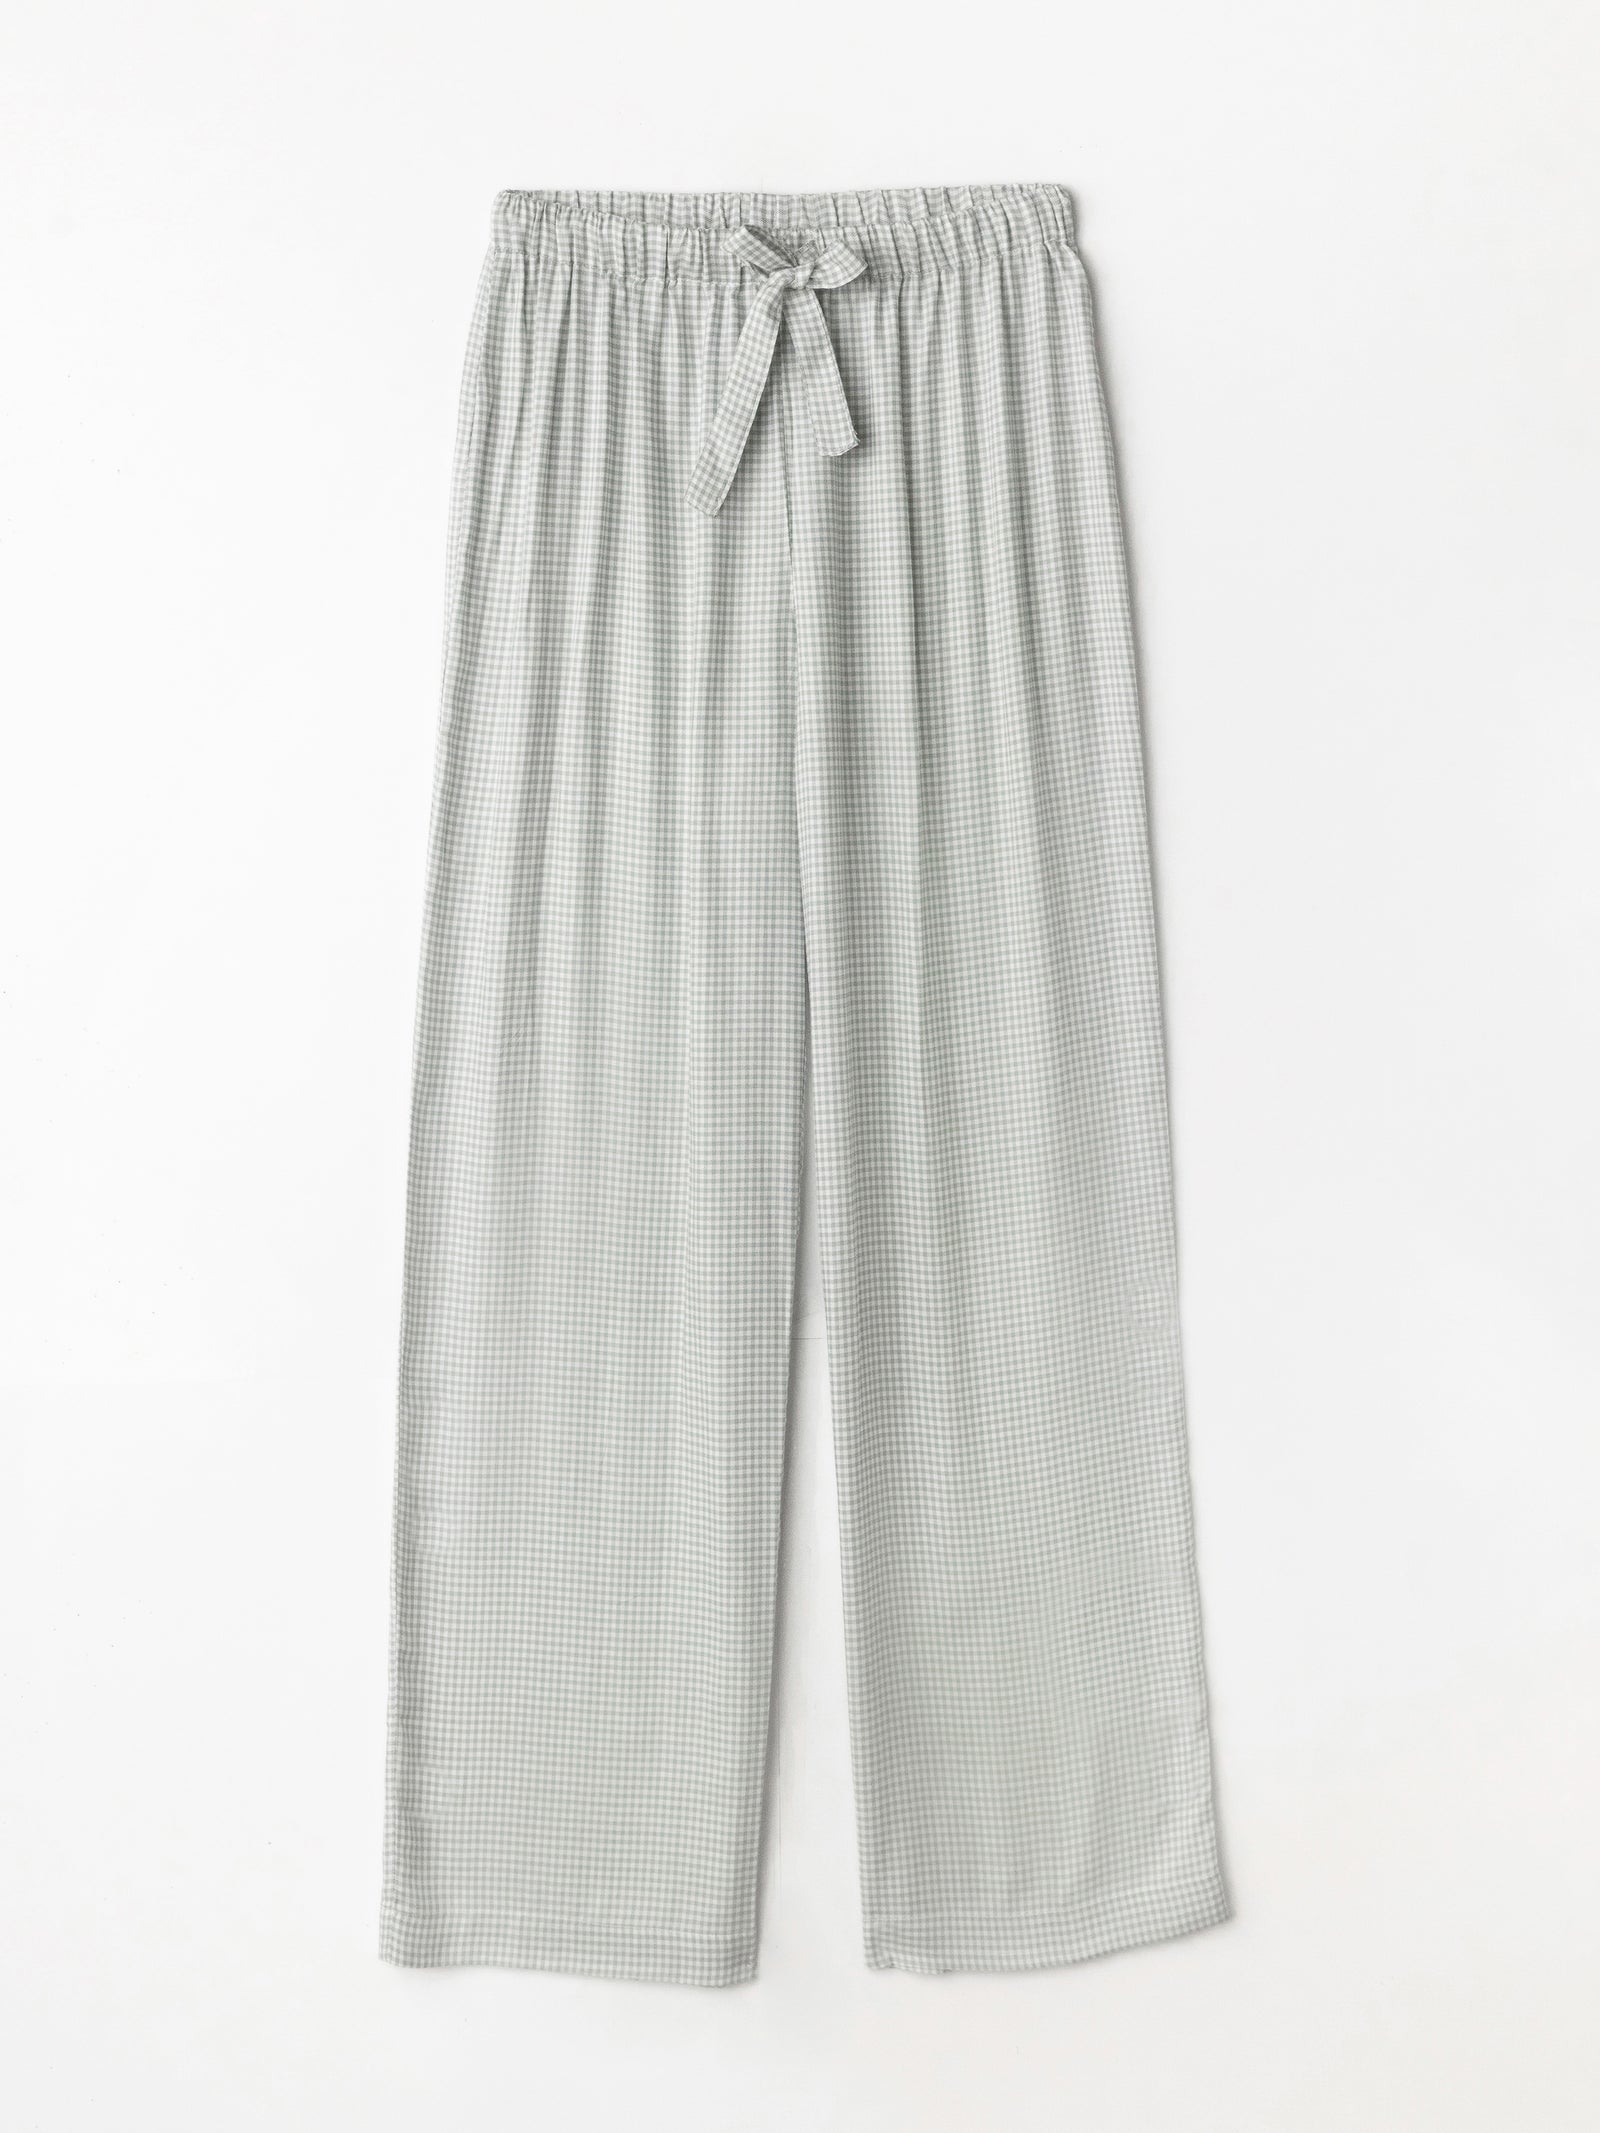 Haze Mini Gingham Soft Woven Pajama pant with white background 